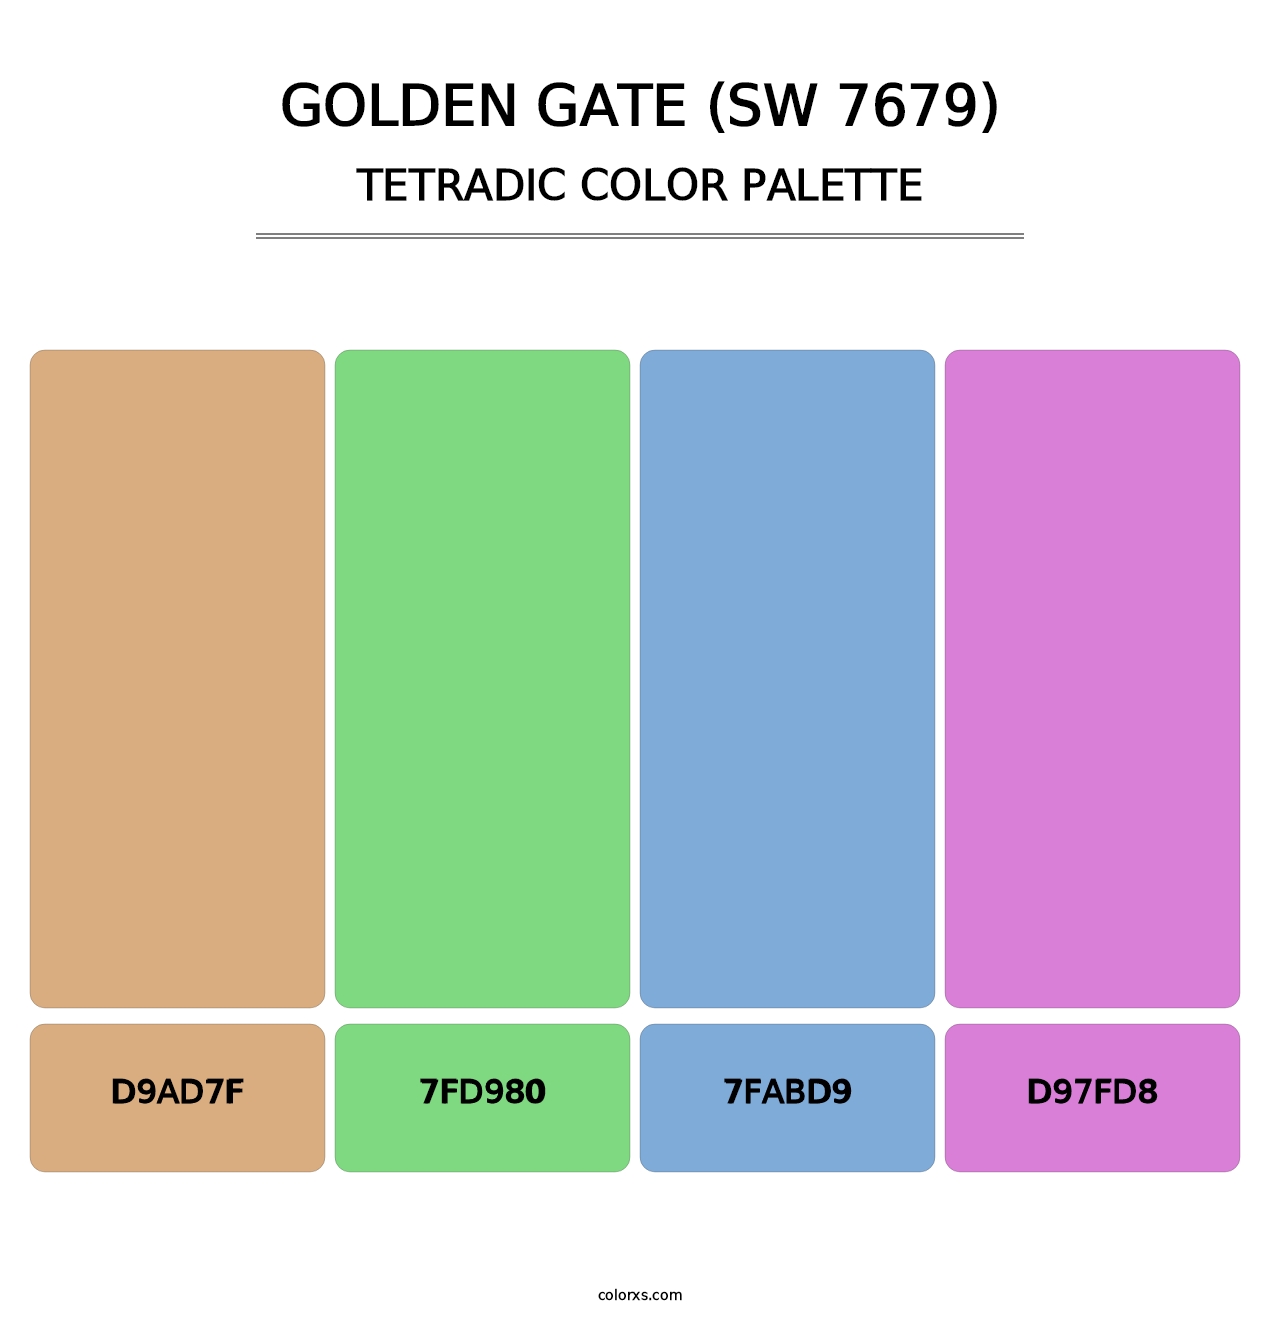 Golden Gate (SW 7679) - Tetradic Color Palette